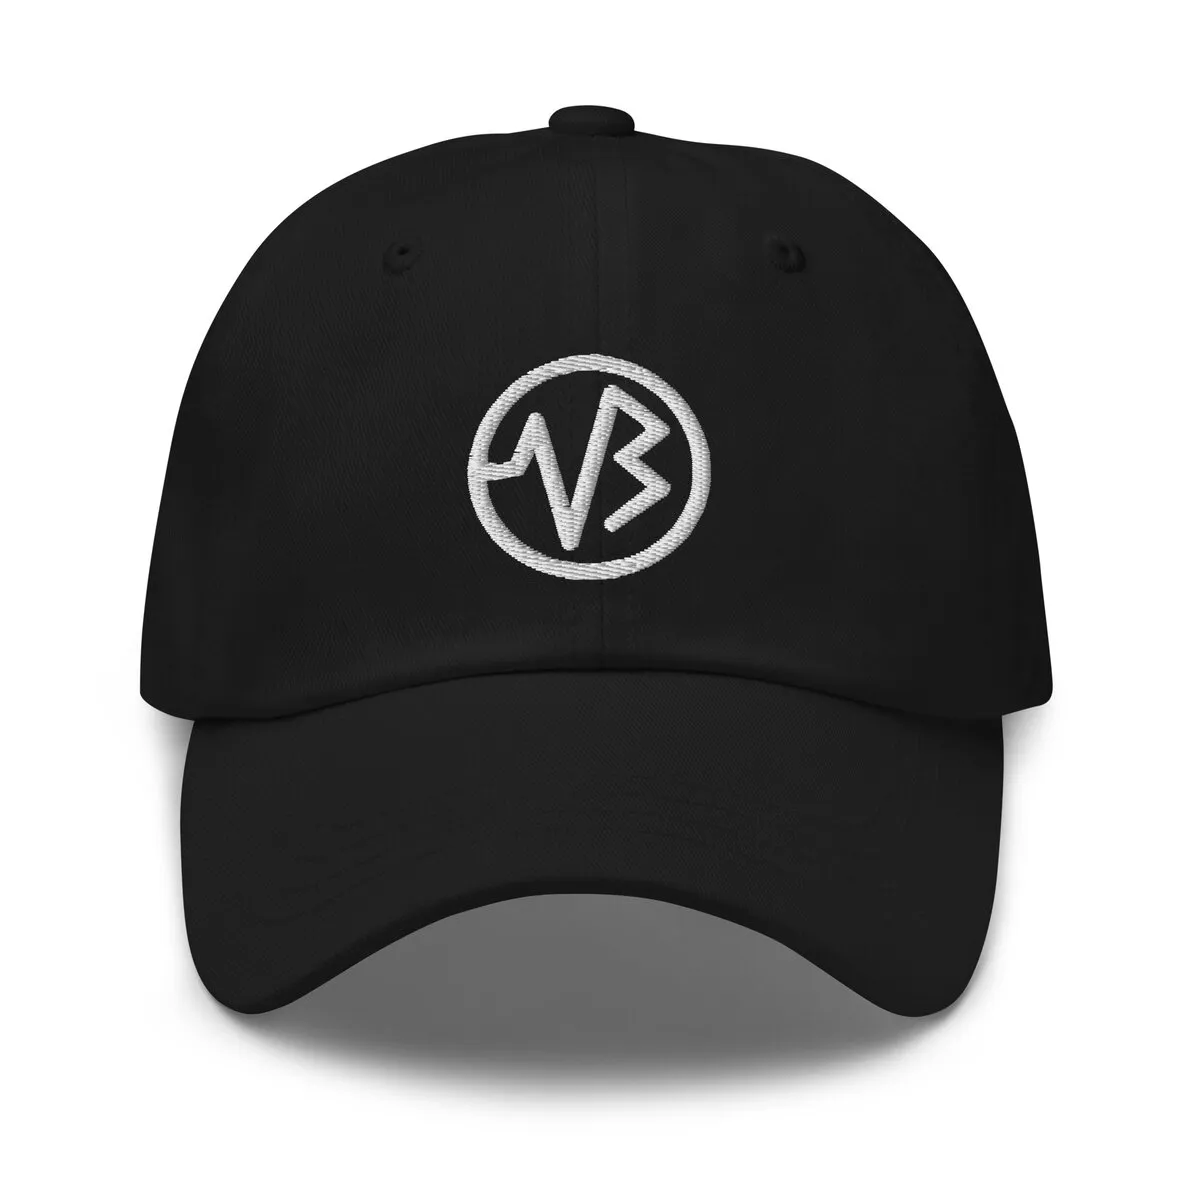 VB Monogram Cap - Black